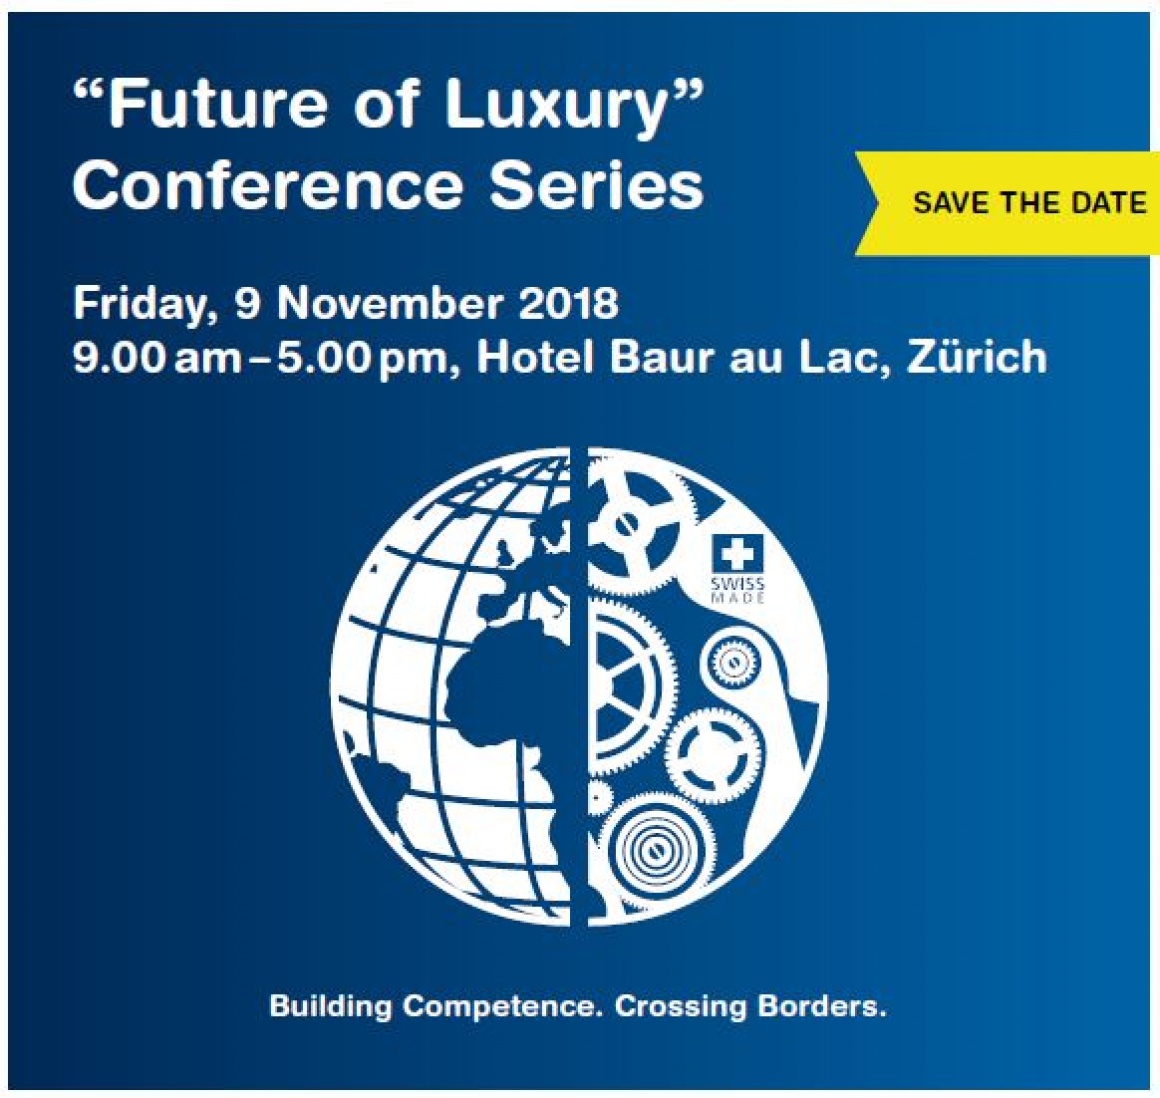 PRIVATKLINIK BETHANIEN | “Future of Luxury” Conference Series